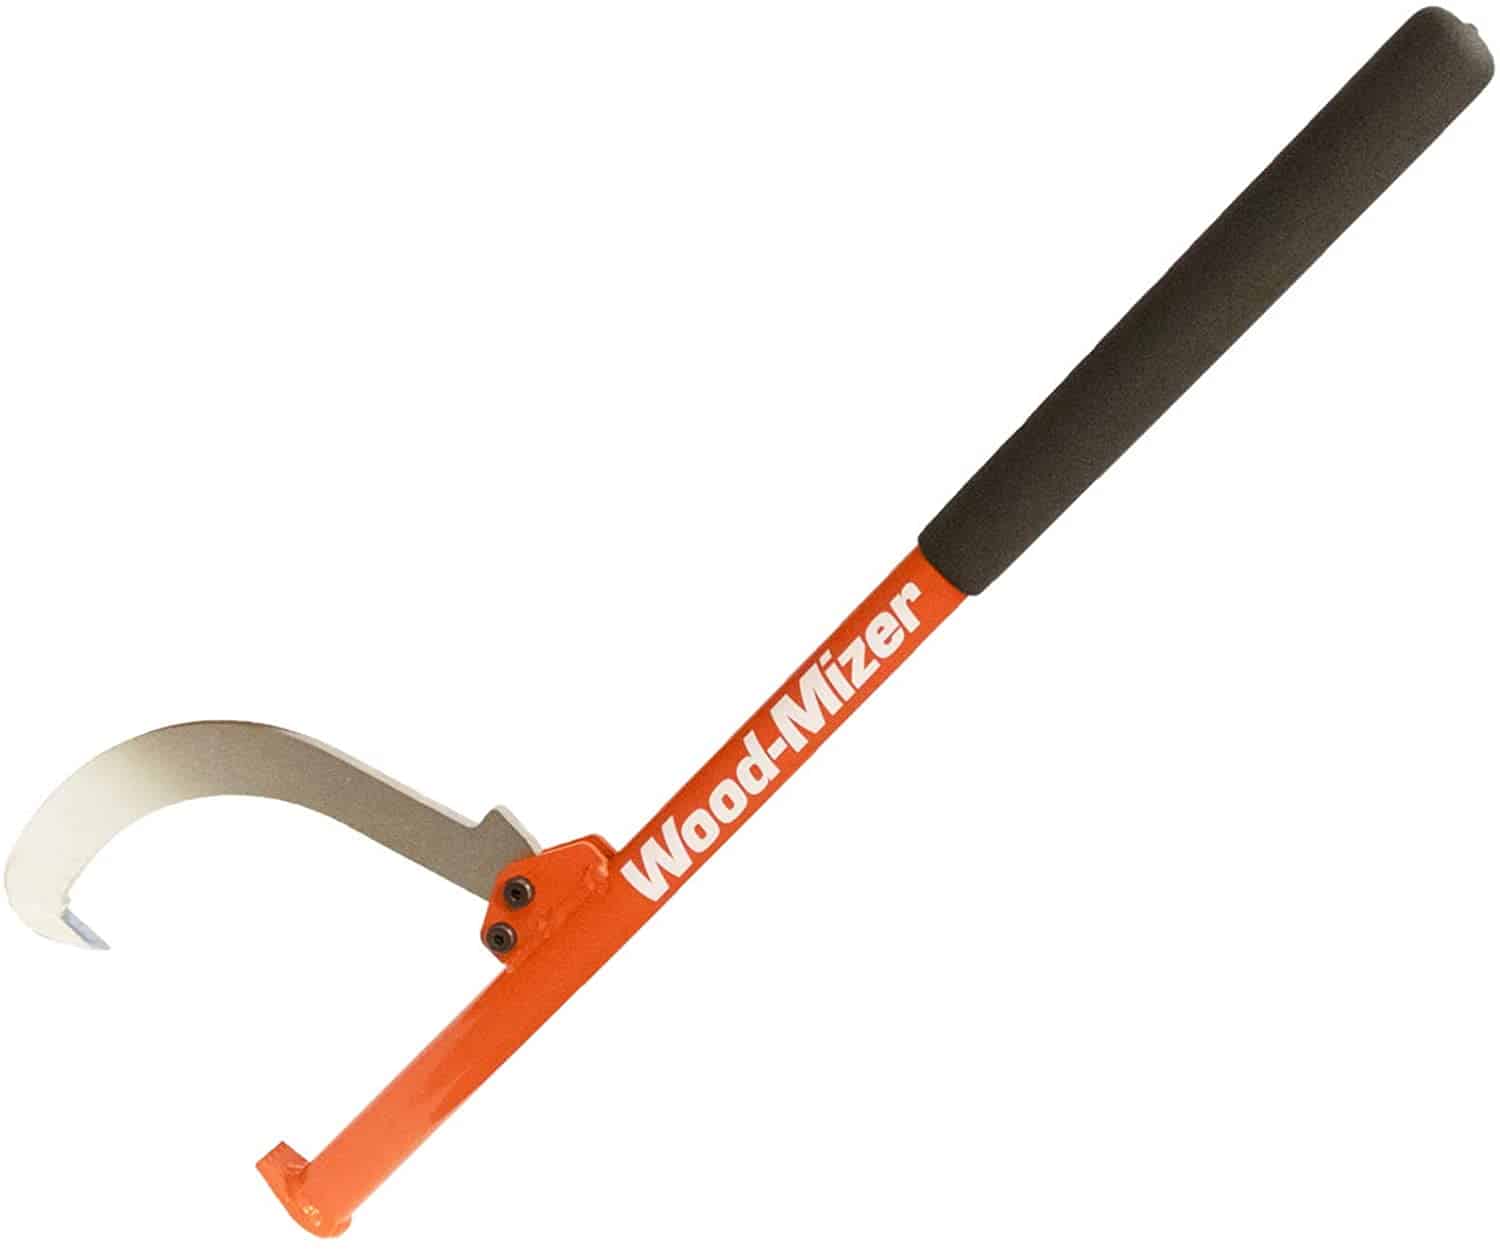 Best short-handled cant hook- Wood-Mizer Steel 28